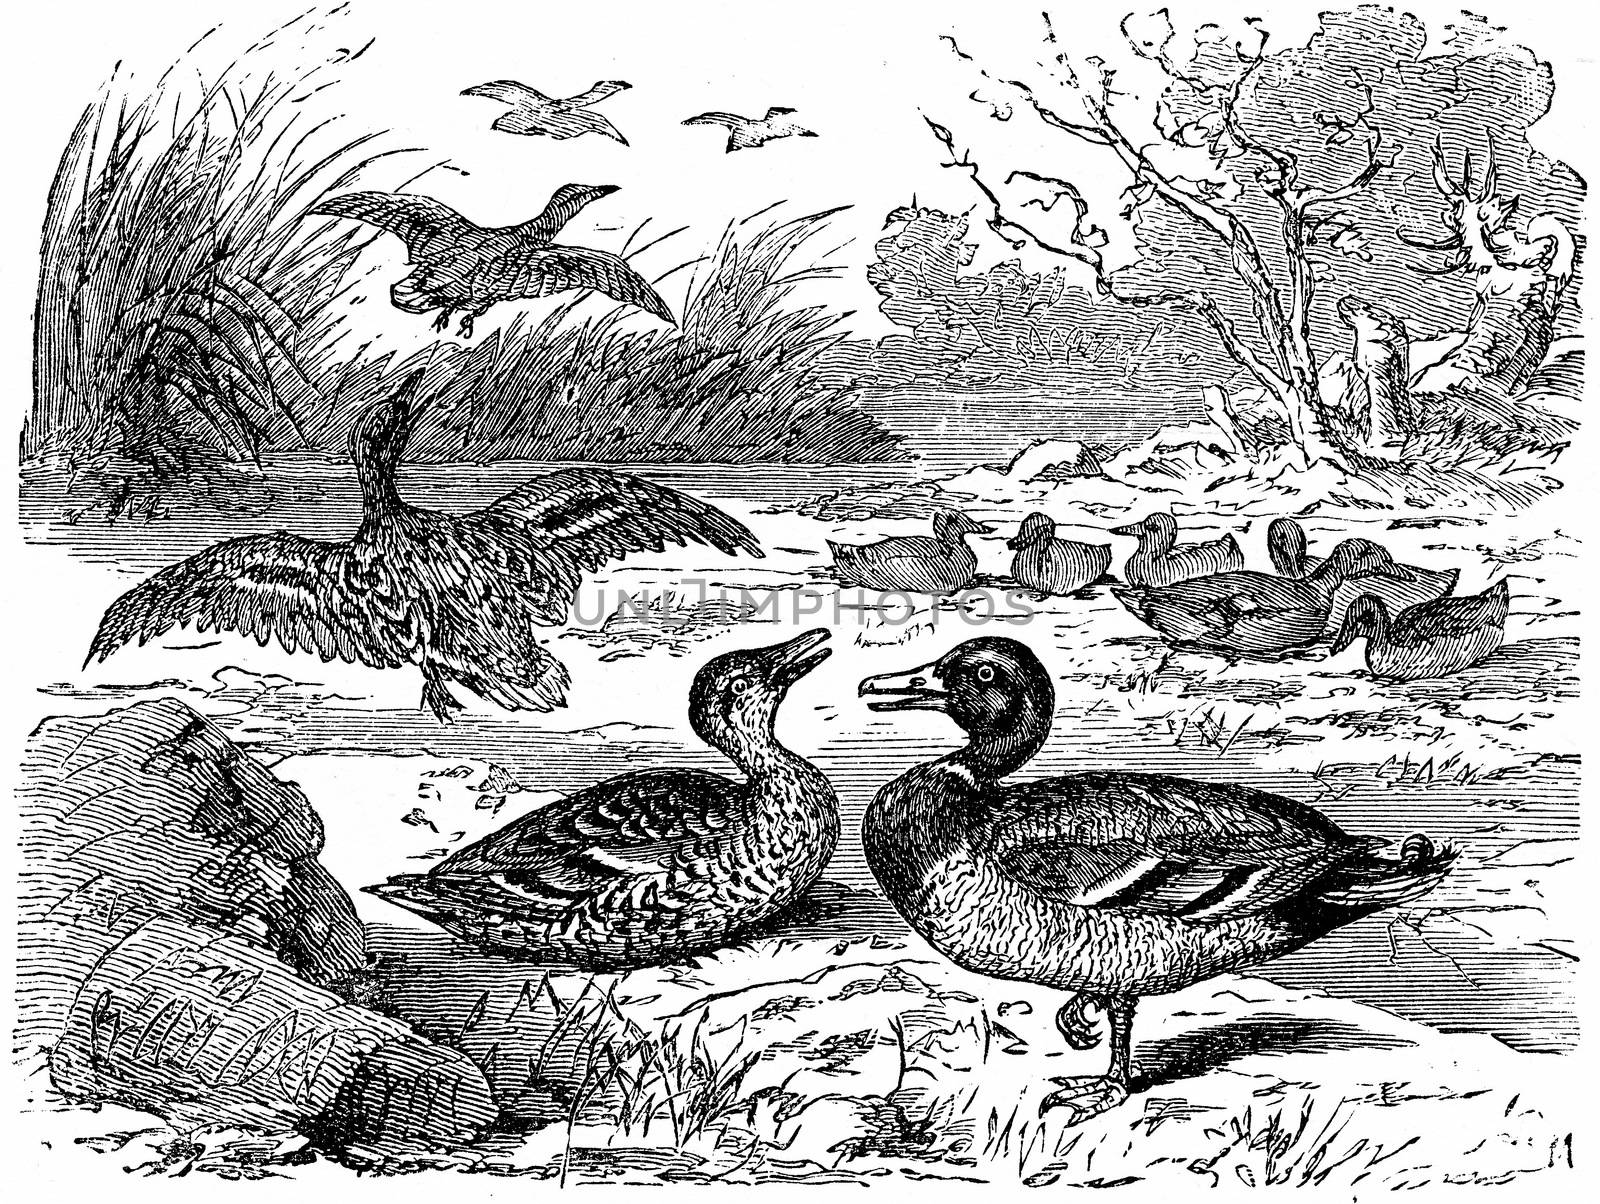 Wild ducks, vintage engraved illustration. From La Vie dans la nature, 1890.